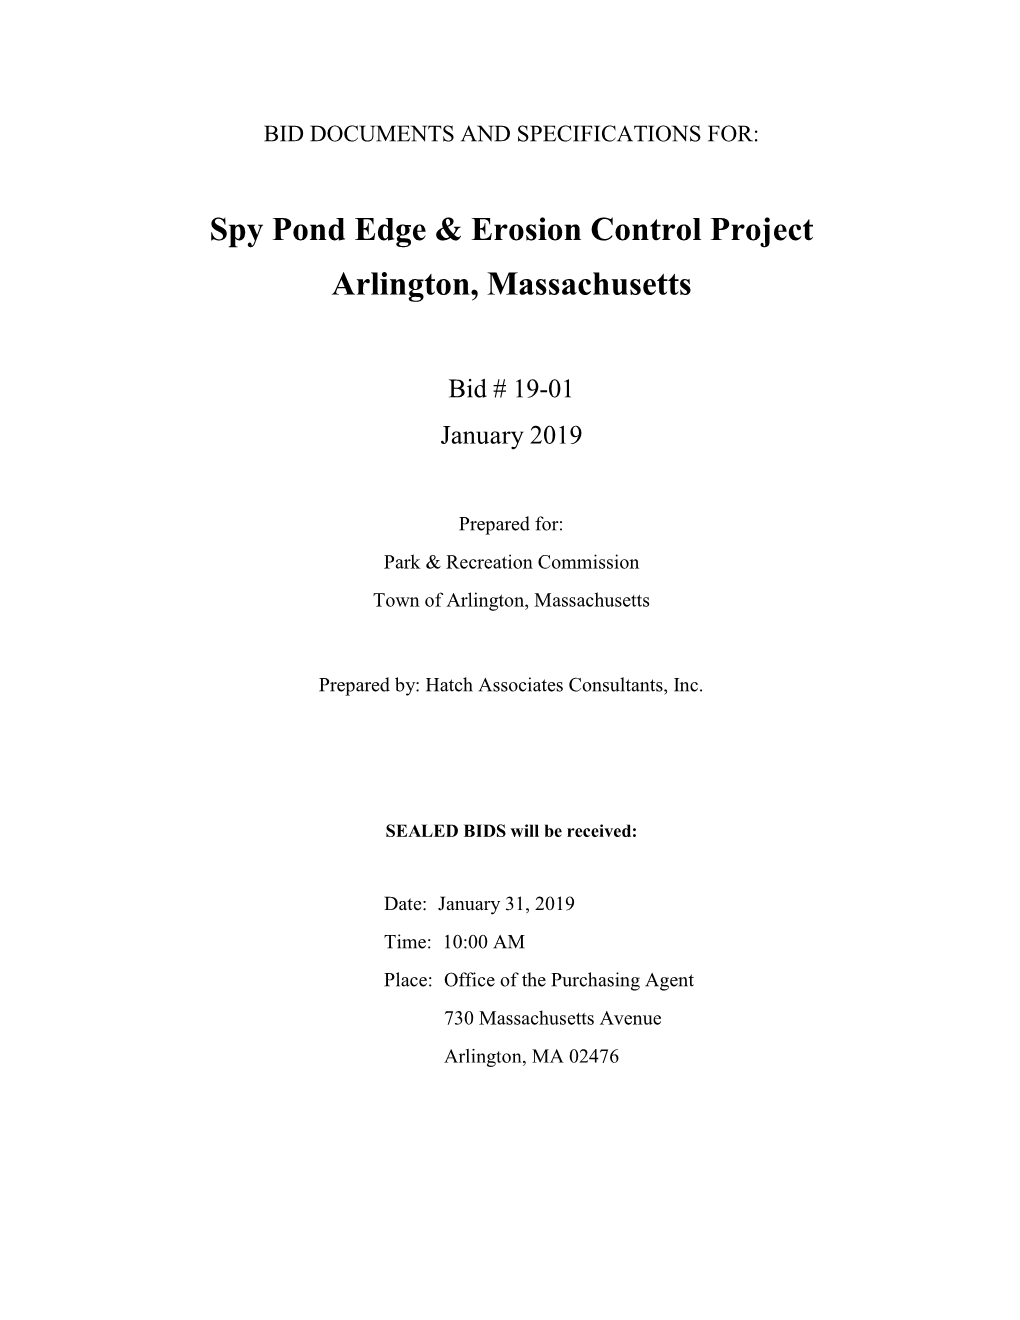 Spy Pond Edge & Erosion Control Project Arlington, Massachusetts